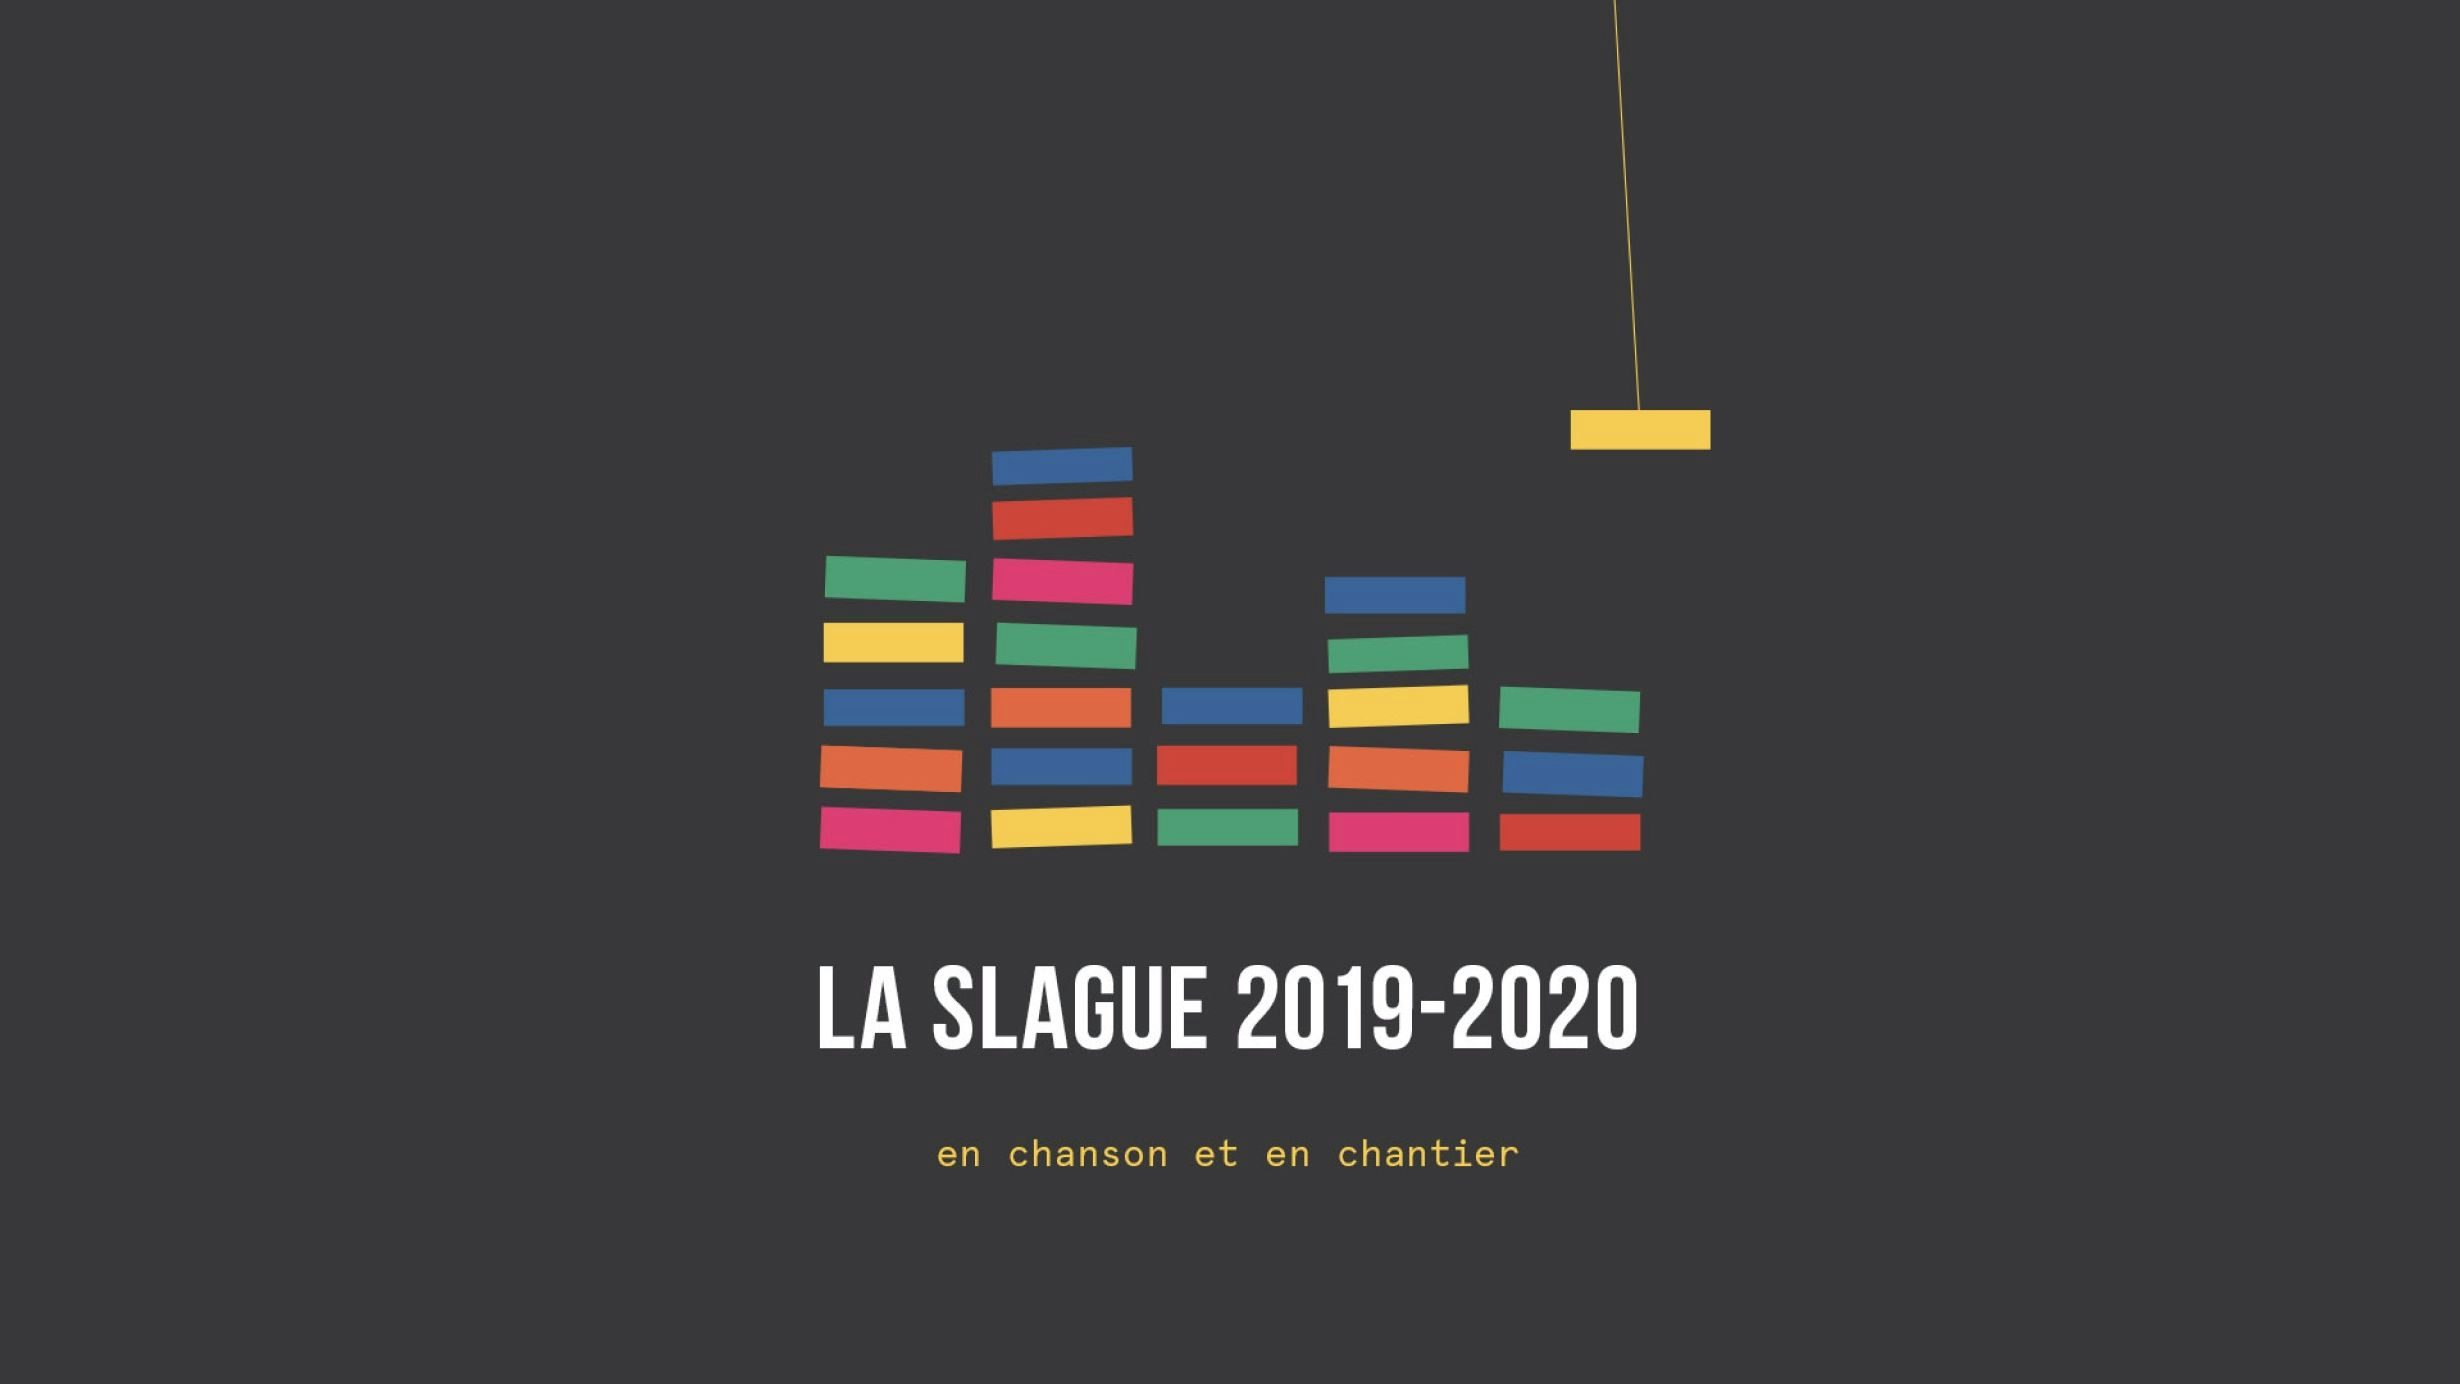 Creative concept for La Slague's 2018-2019 season